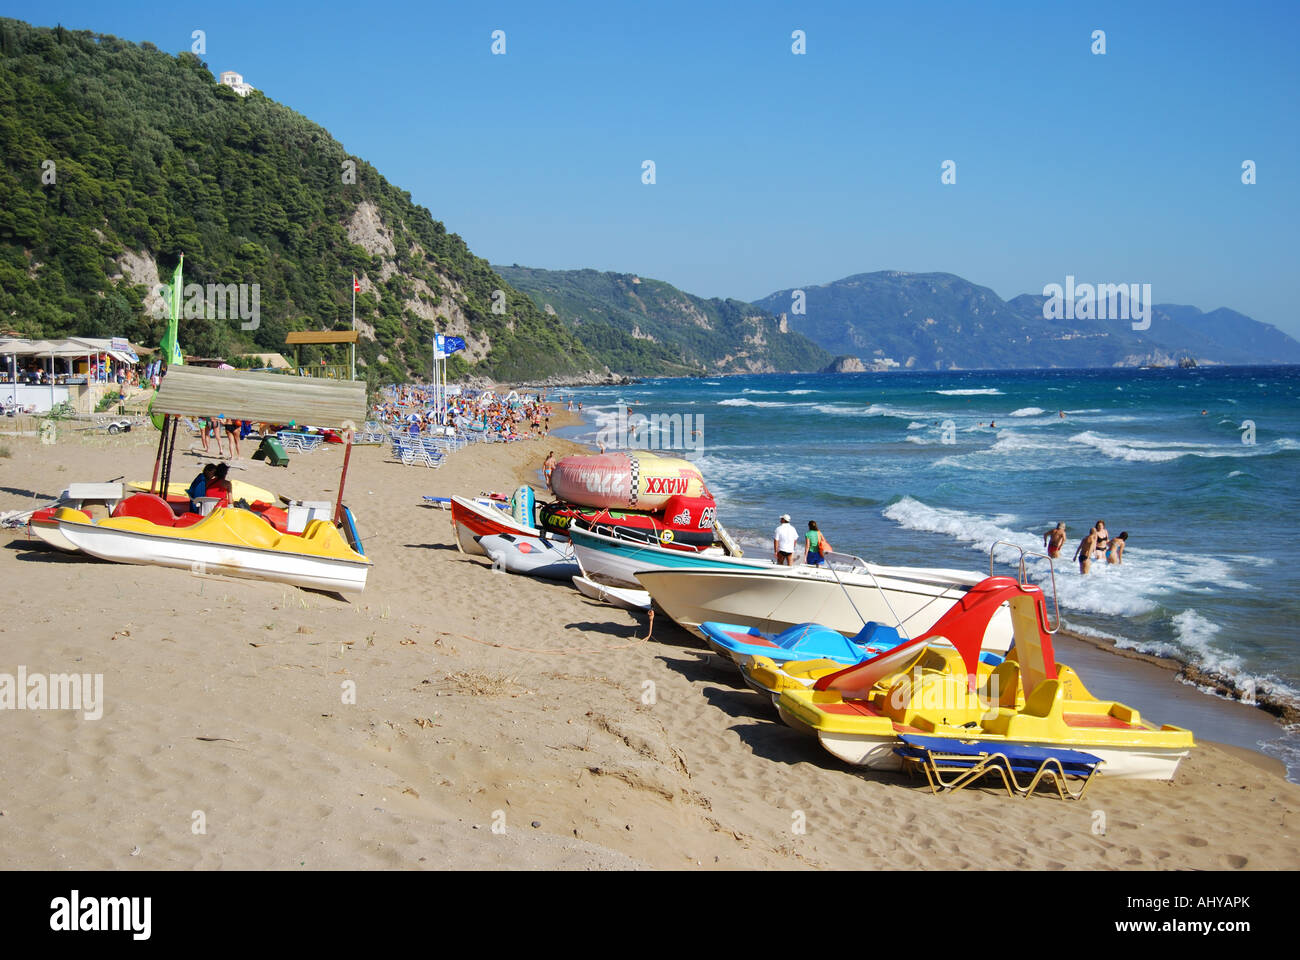 Glyfada Beach, Glyfada, Corfu, Ionian Islands, Greece Stock Photo